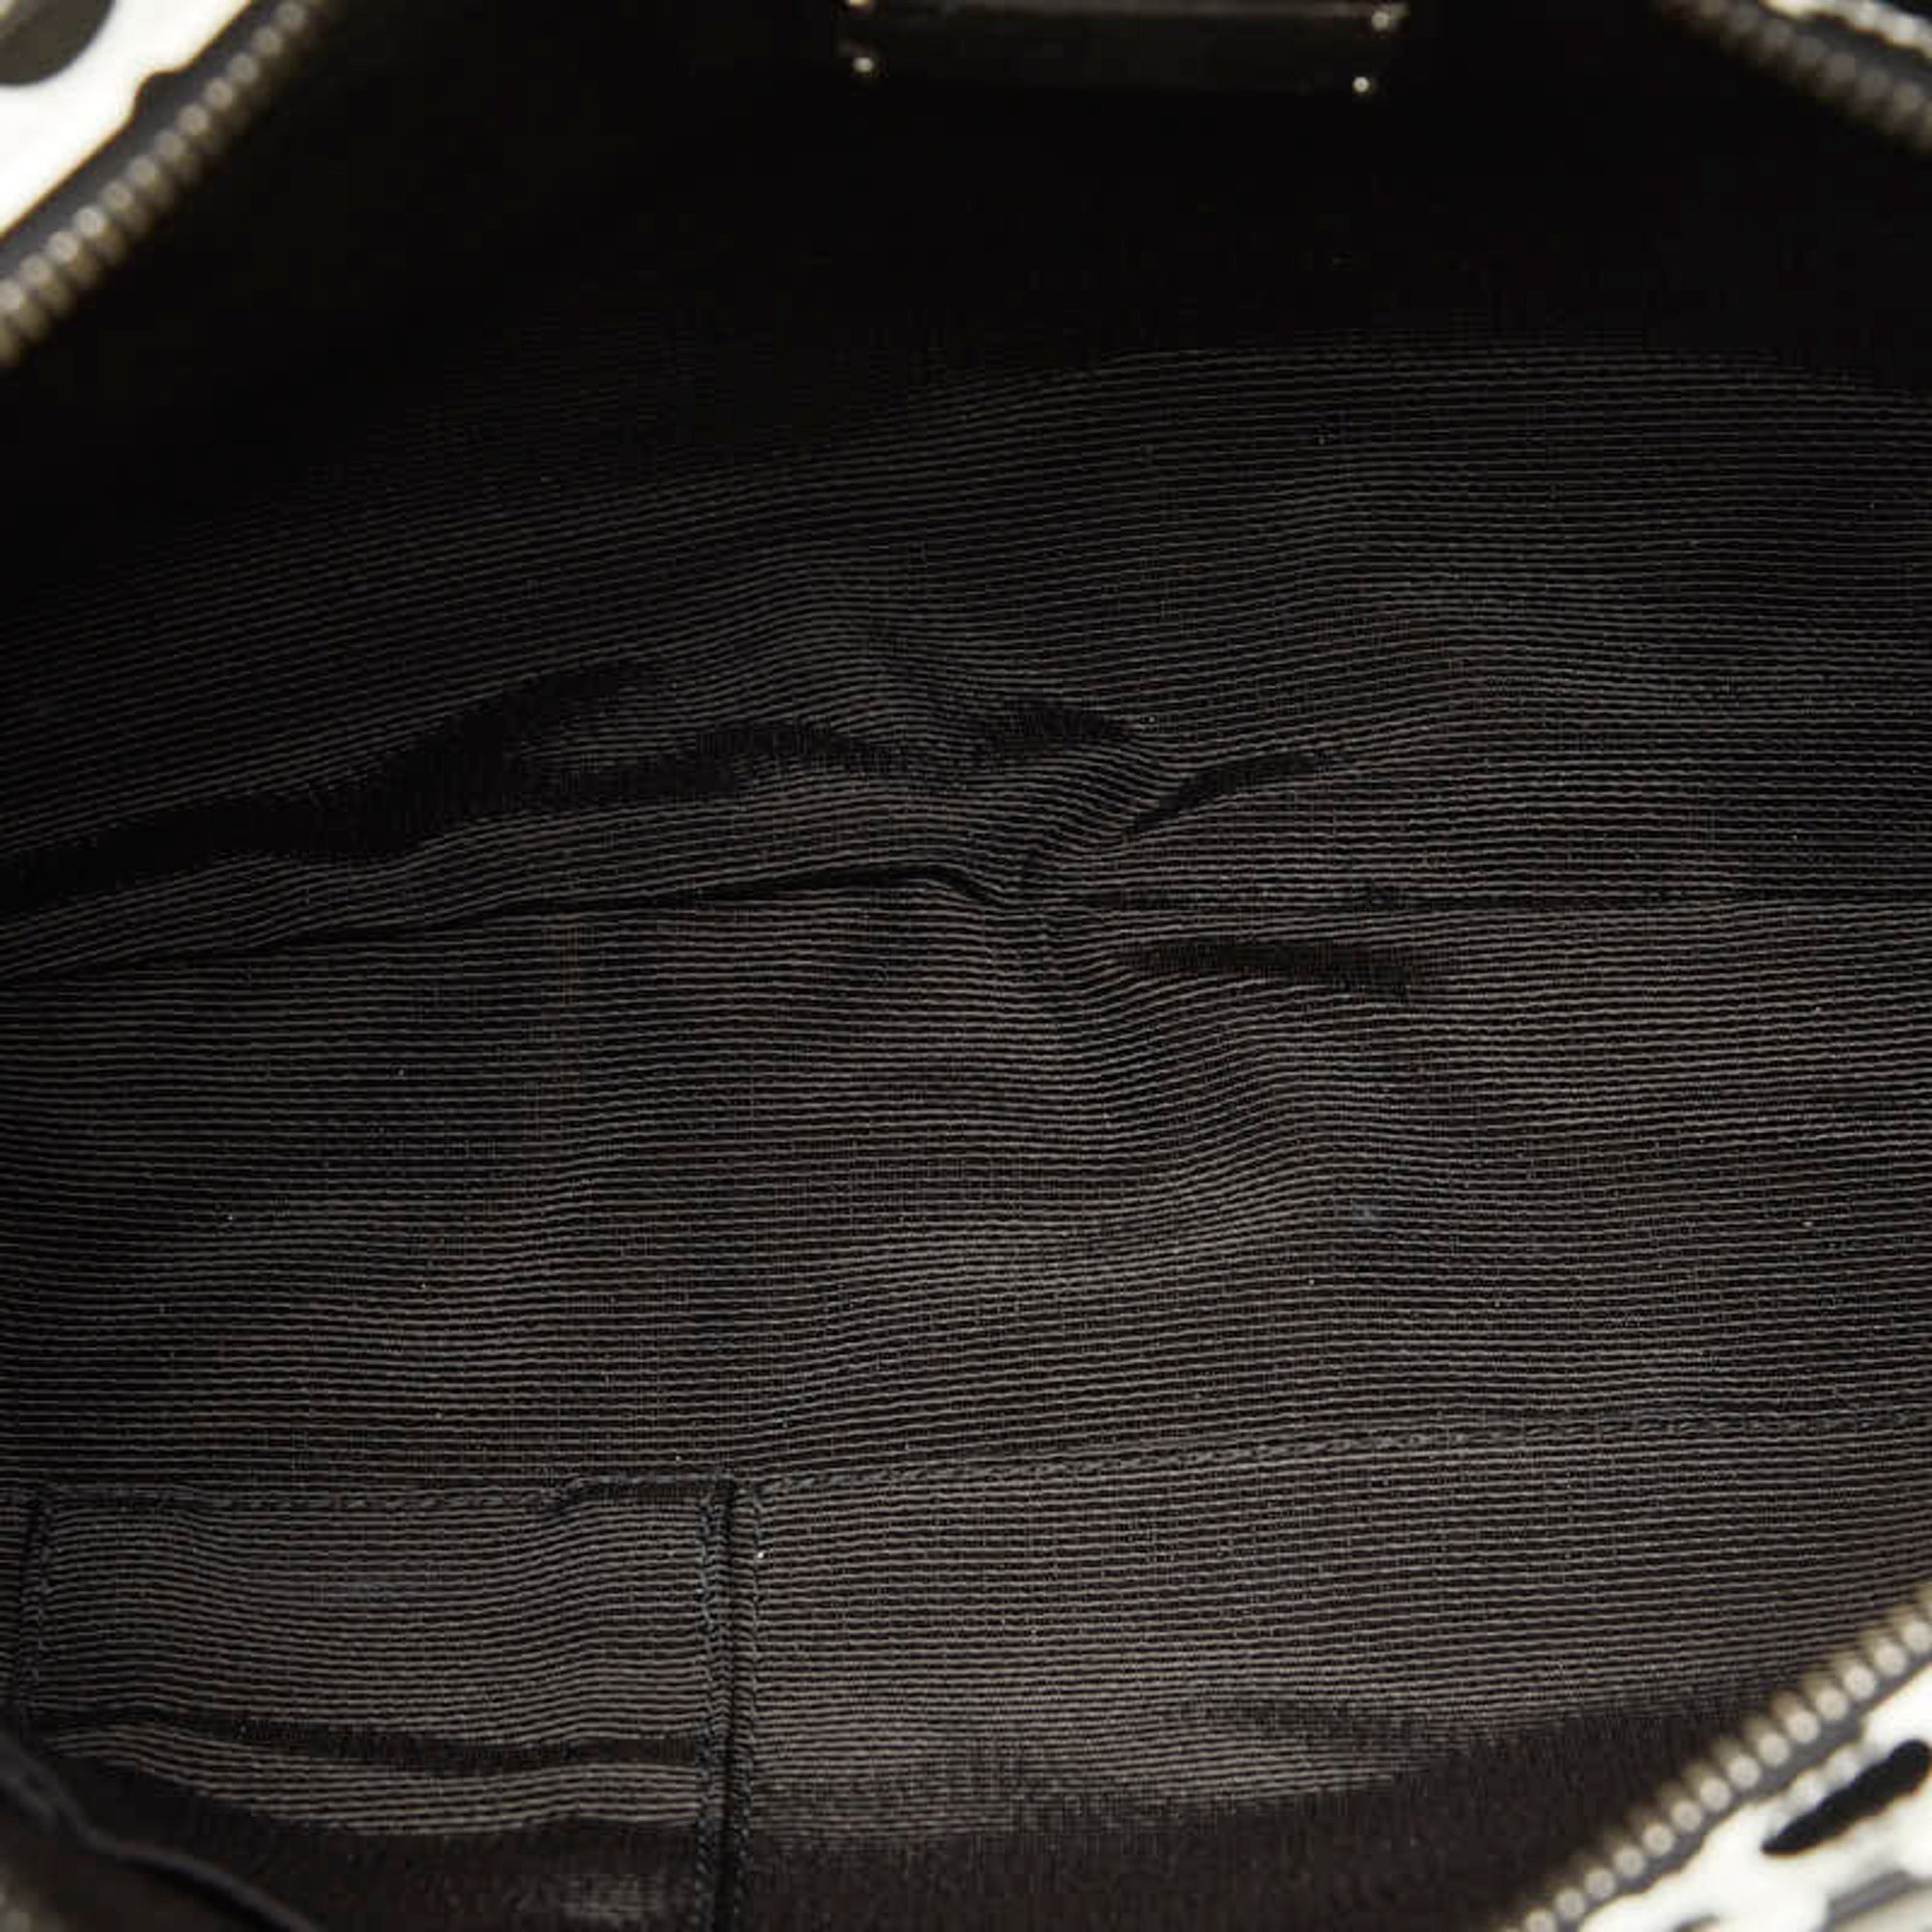 Salvatore Ferragamo x Yayoi Kusama Marissa Handbag AB-2139 Black White Leather Women's